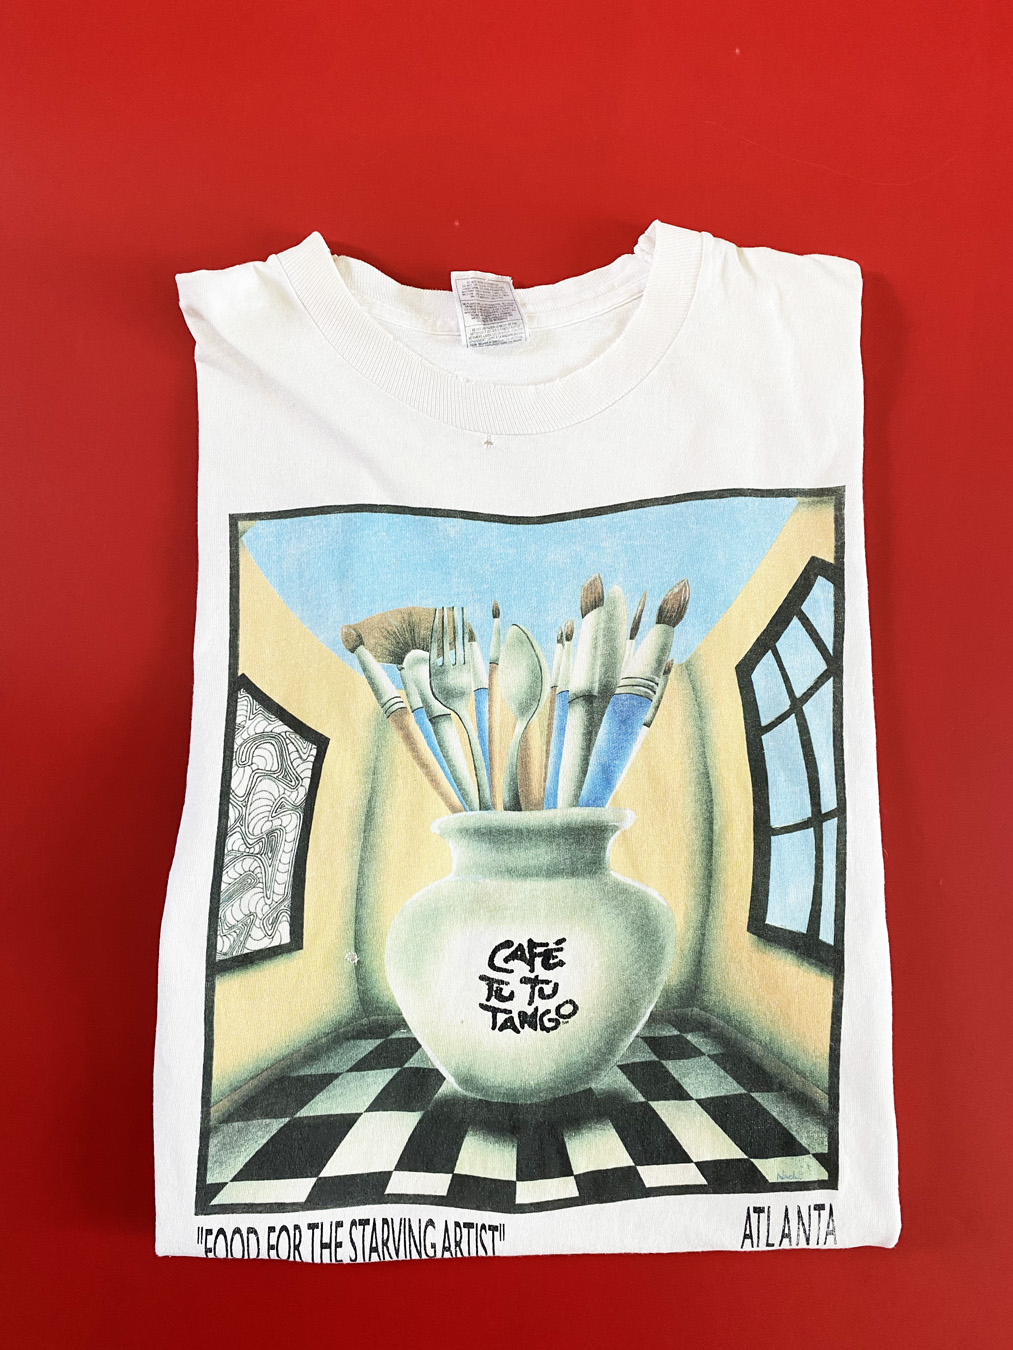 90s Cafe Tu Tu Tango ‘Food for Starving Artist’ T-Shirt